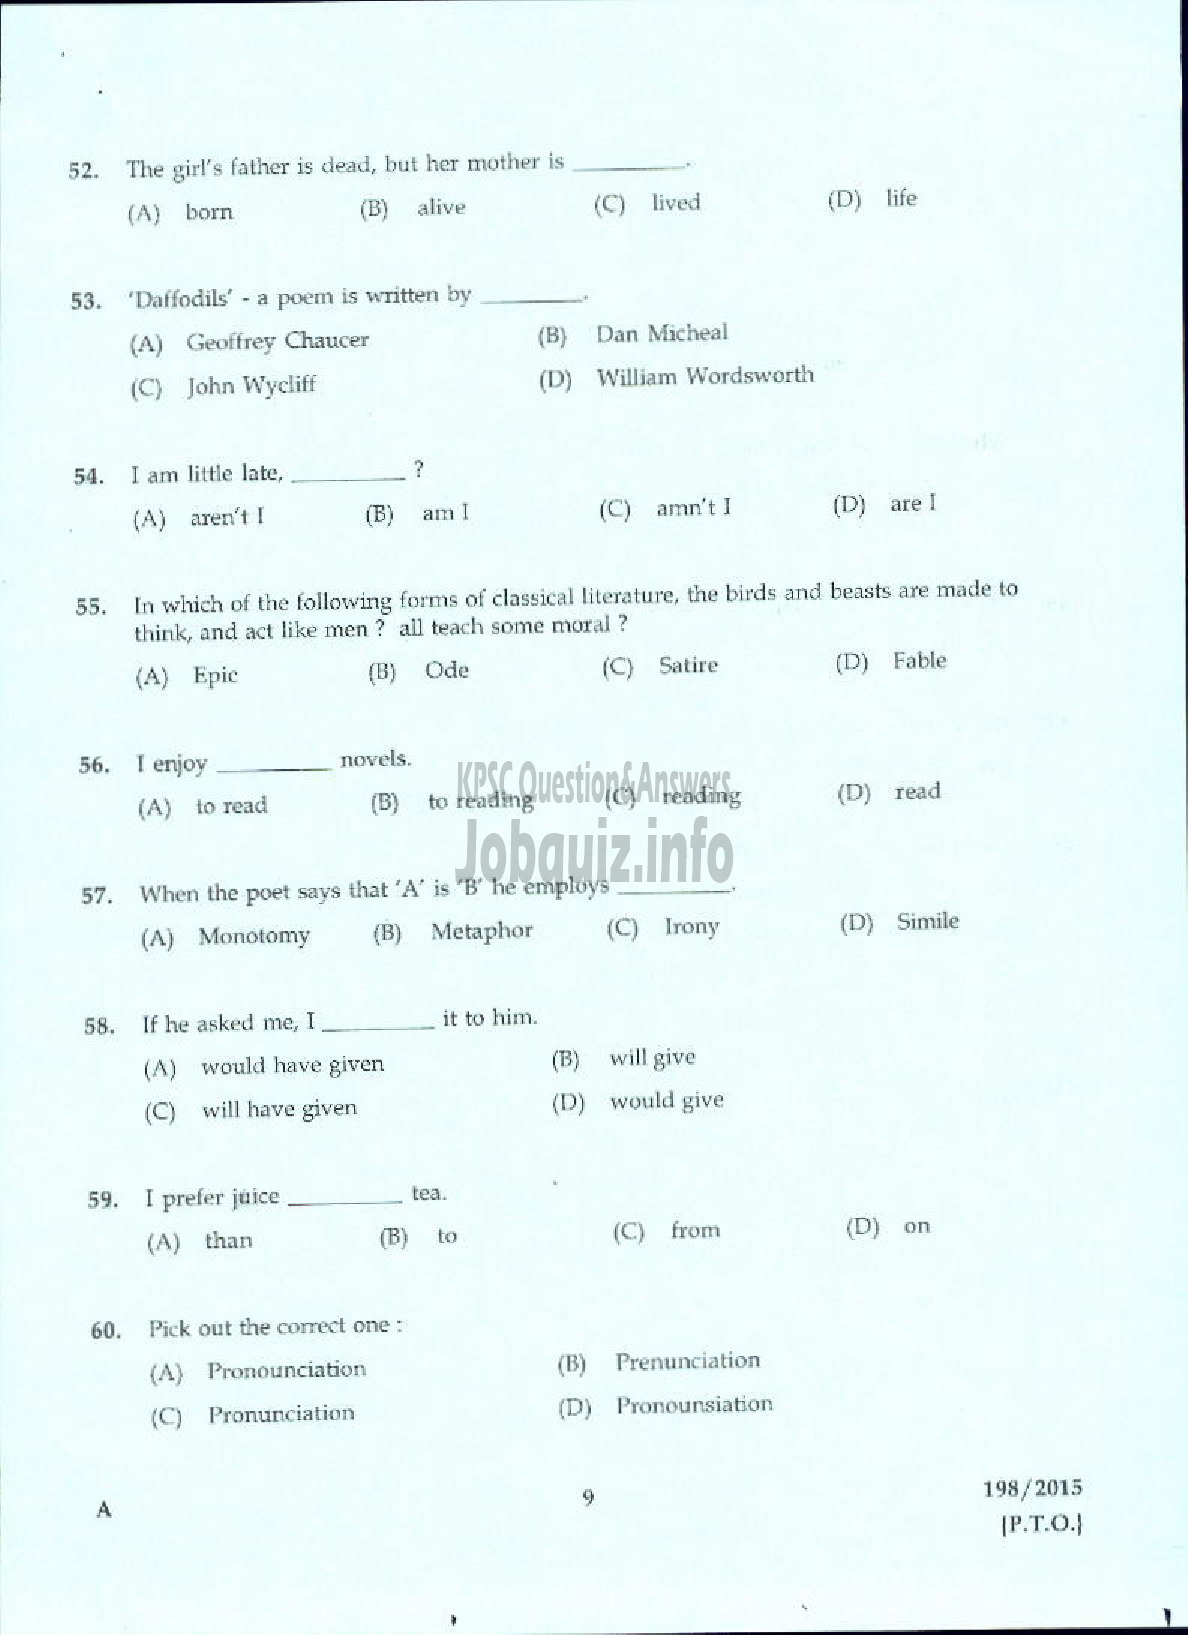 Kerala PSC Question Paper - TELEPHONE OPERATOR DCB/MCS-7